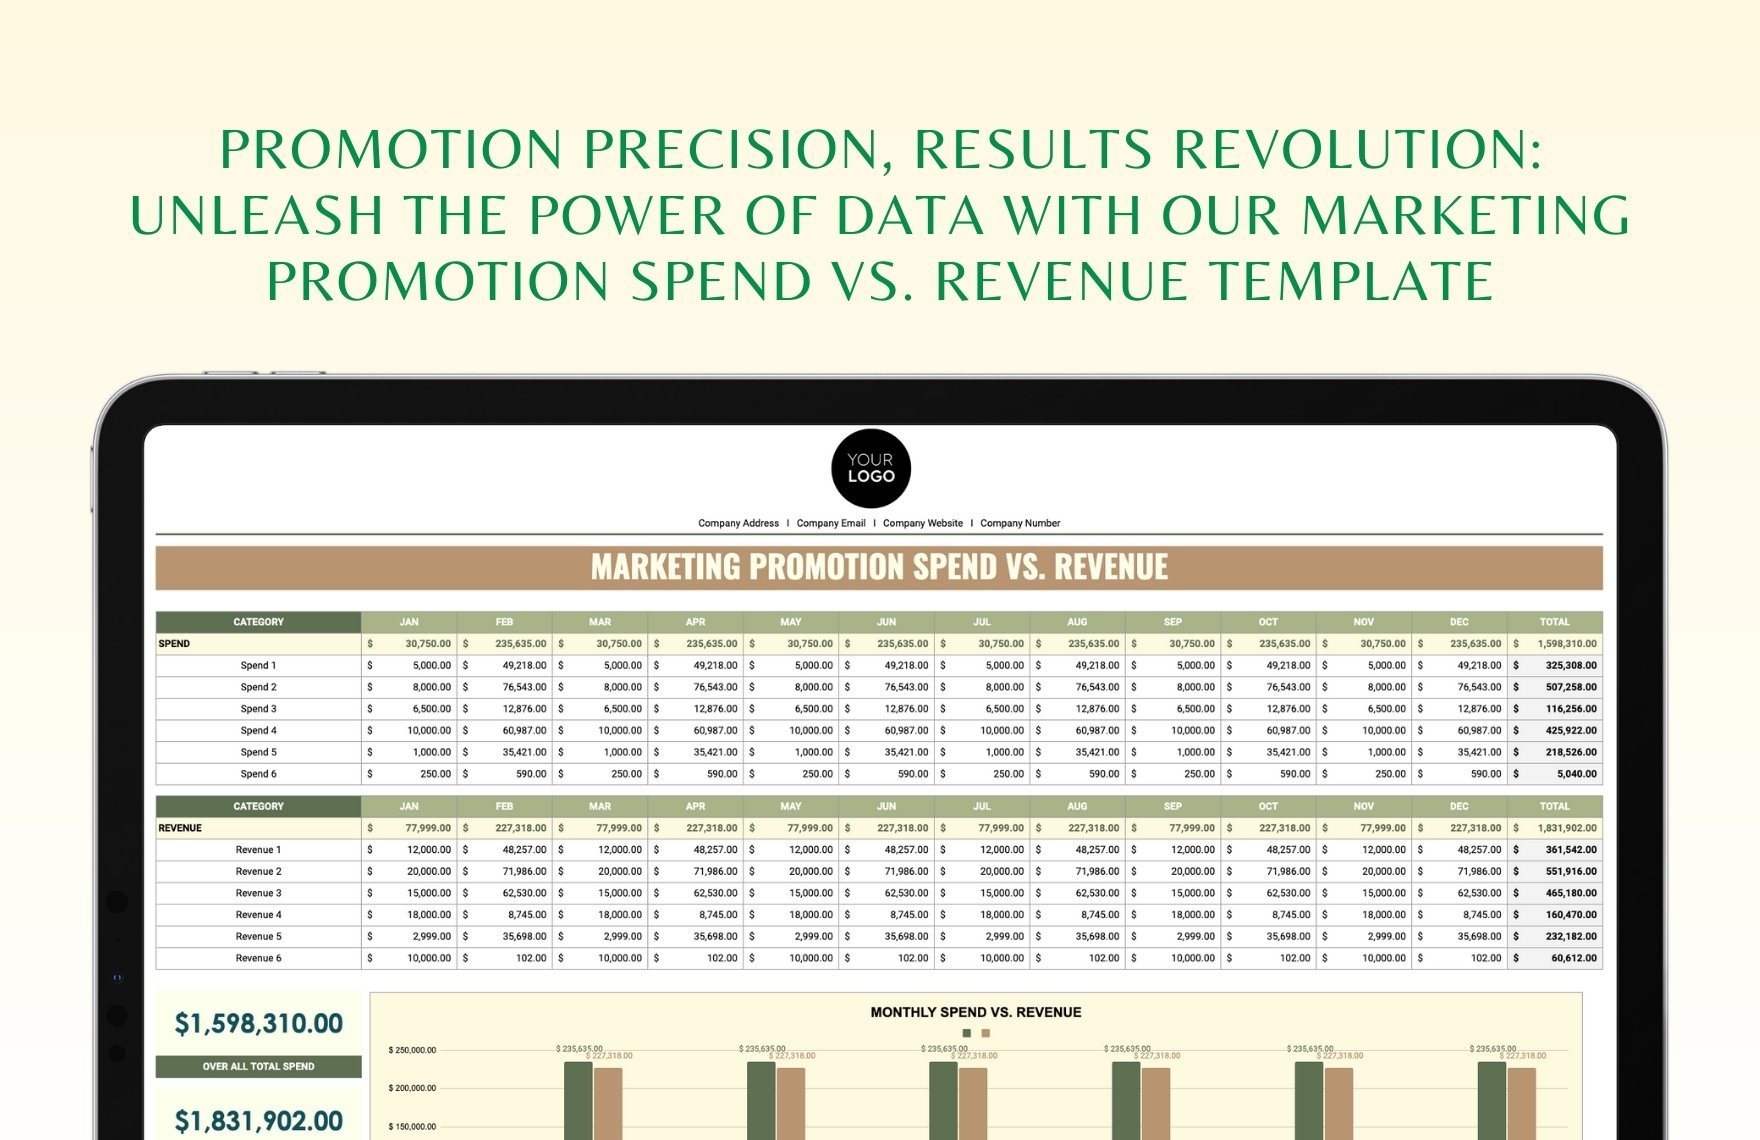 Marketing Promotion Spend vs Revenue Template